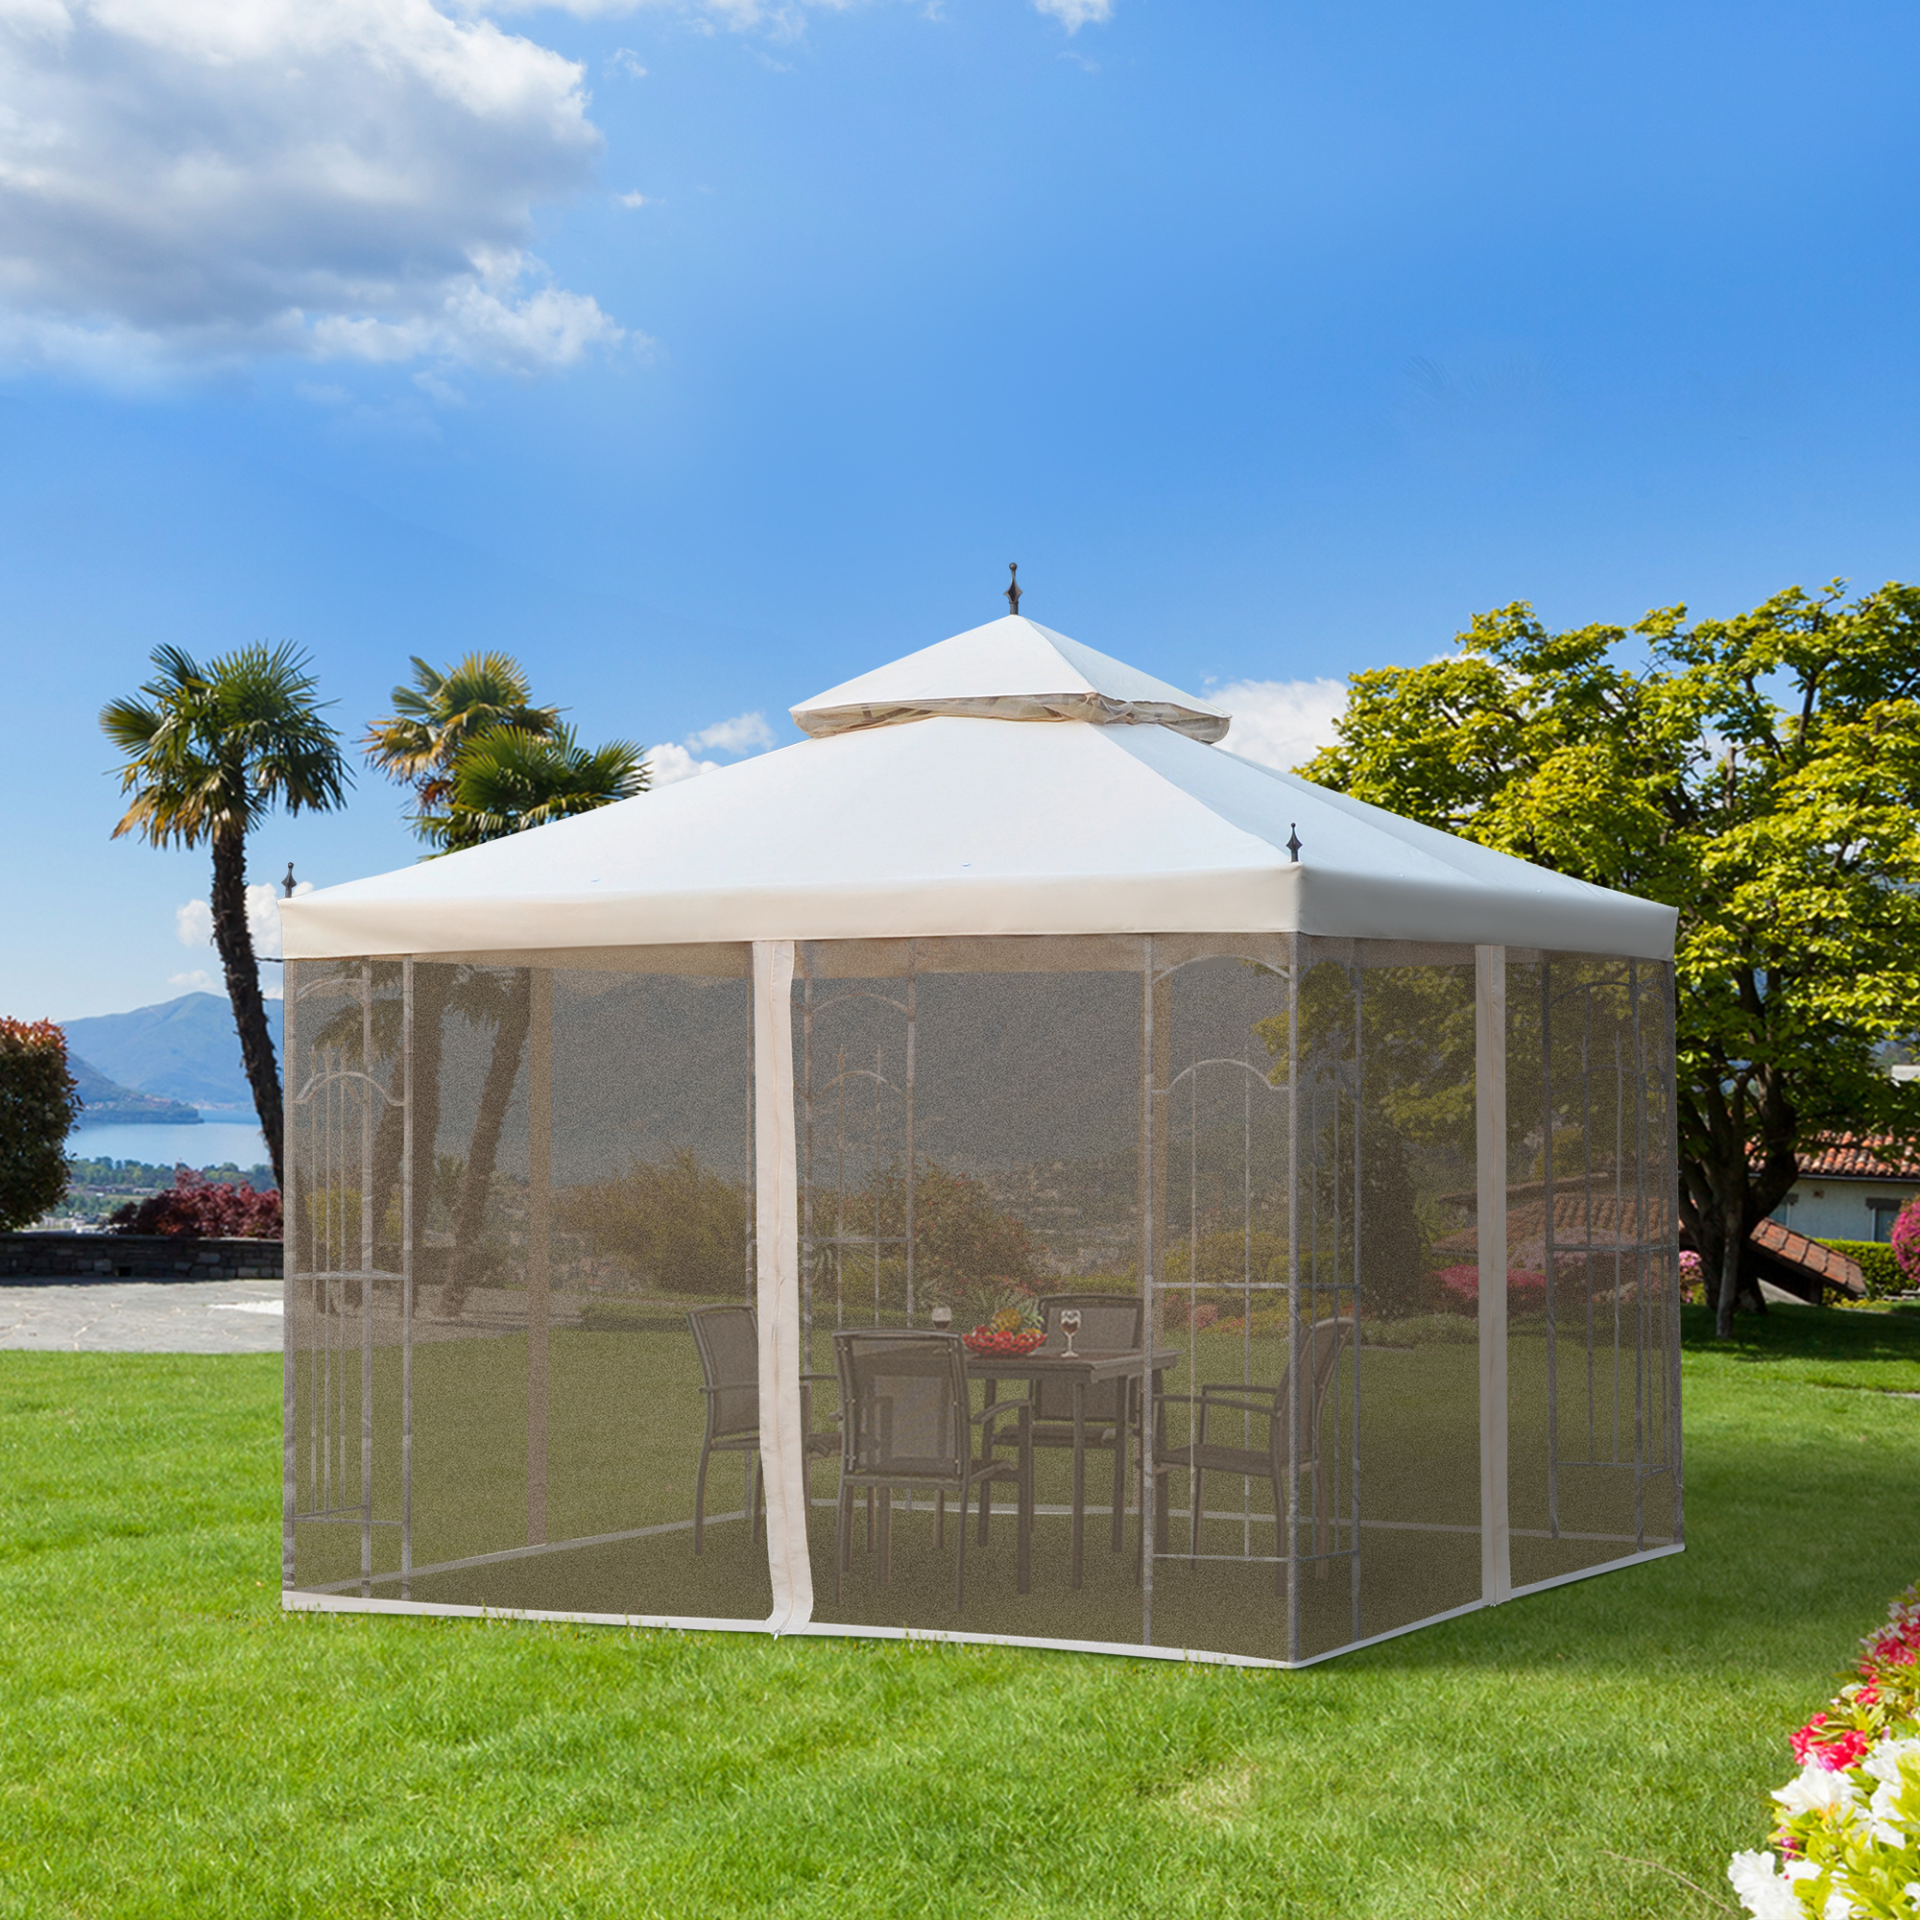 Outsunny 3(M)x3(M) Garden Gazebo Double Top Outdoor Canopy Patio Event Party Wedding Tent Backyard Sun Shade with Mesh Curtain Metal Frame - Cream White